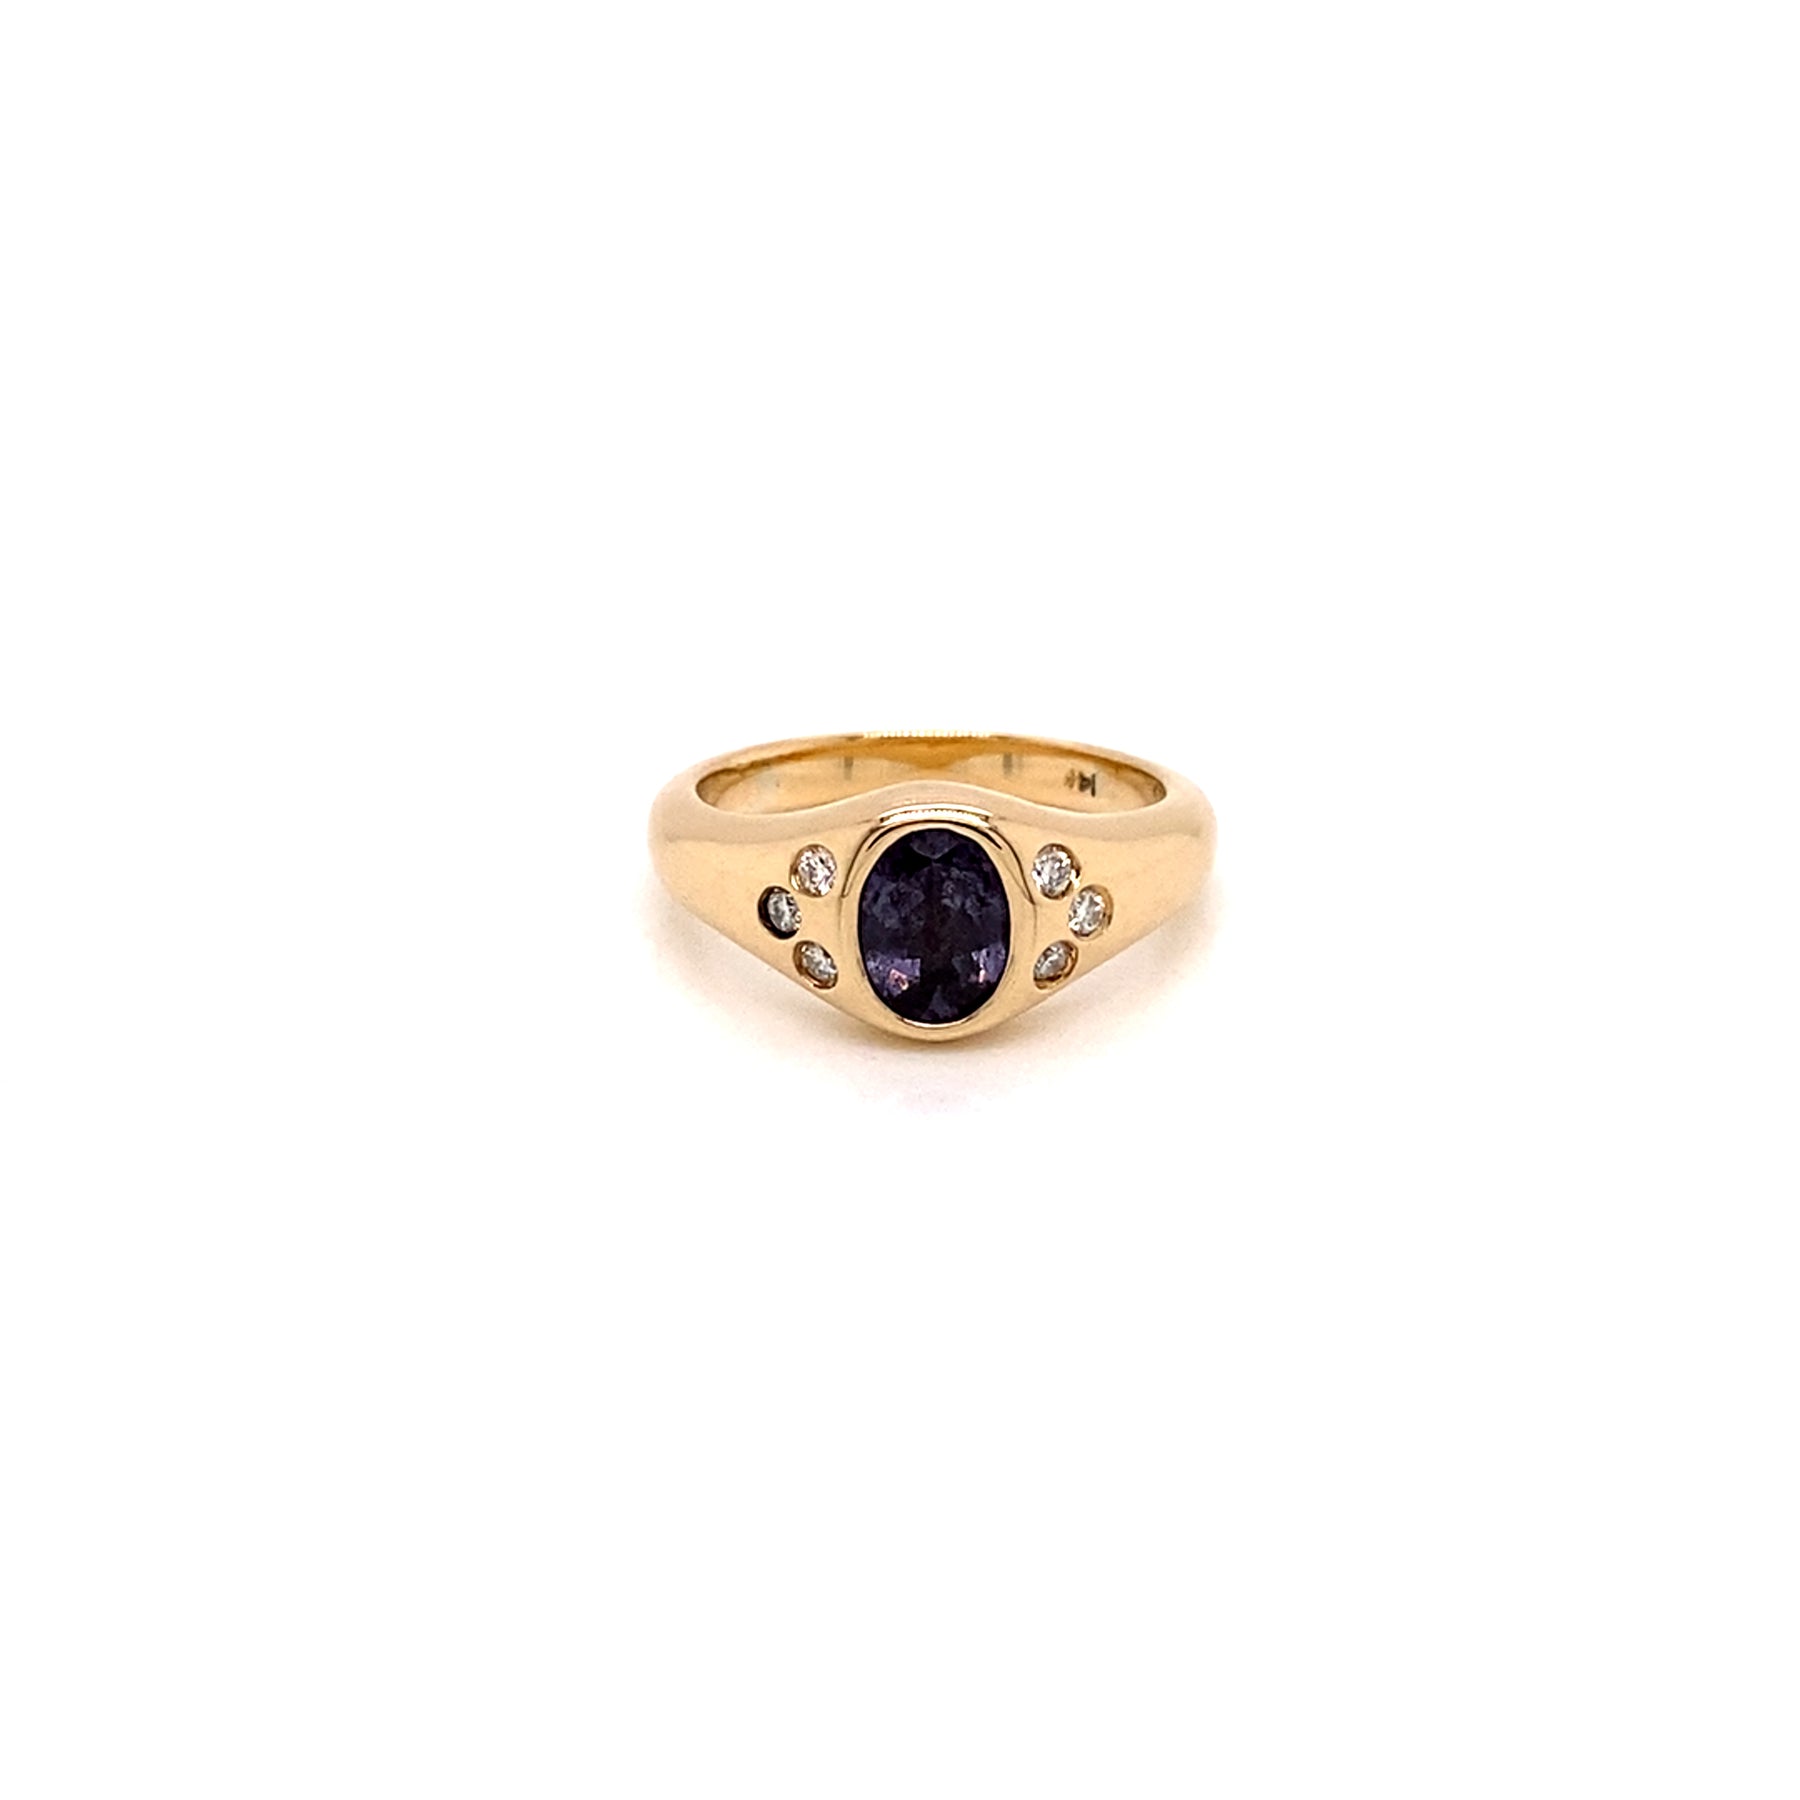 Buy Mens Ring Black Onyx Signet Ring Men Onyx Ring All Black Signet Ring  Mens Gemstone Rings Black Pinky Rings for Men Ring Jewelry Online in India  - Etsy